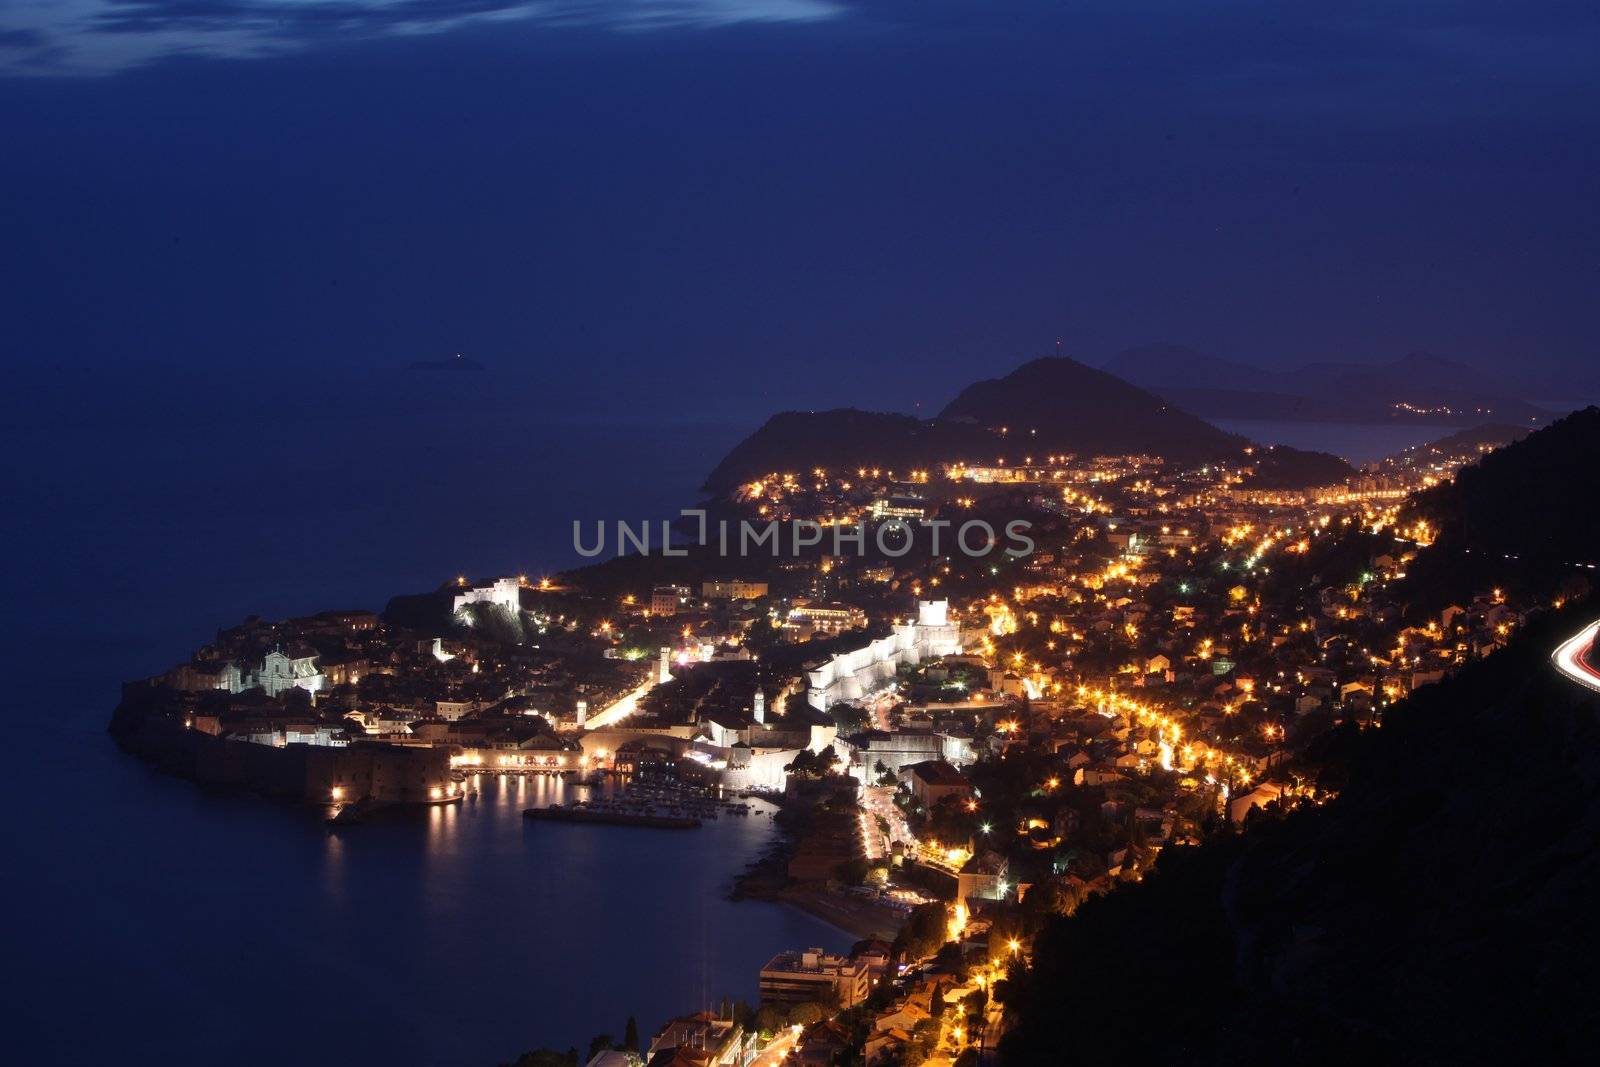 Dubrovnik, Croatia. Most popular travel destination in Adriatic sea. Night scene